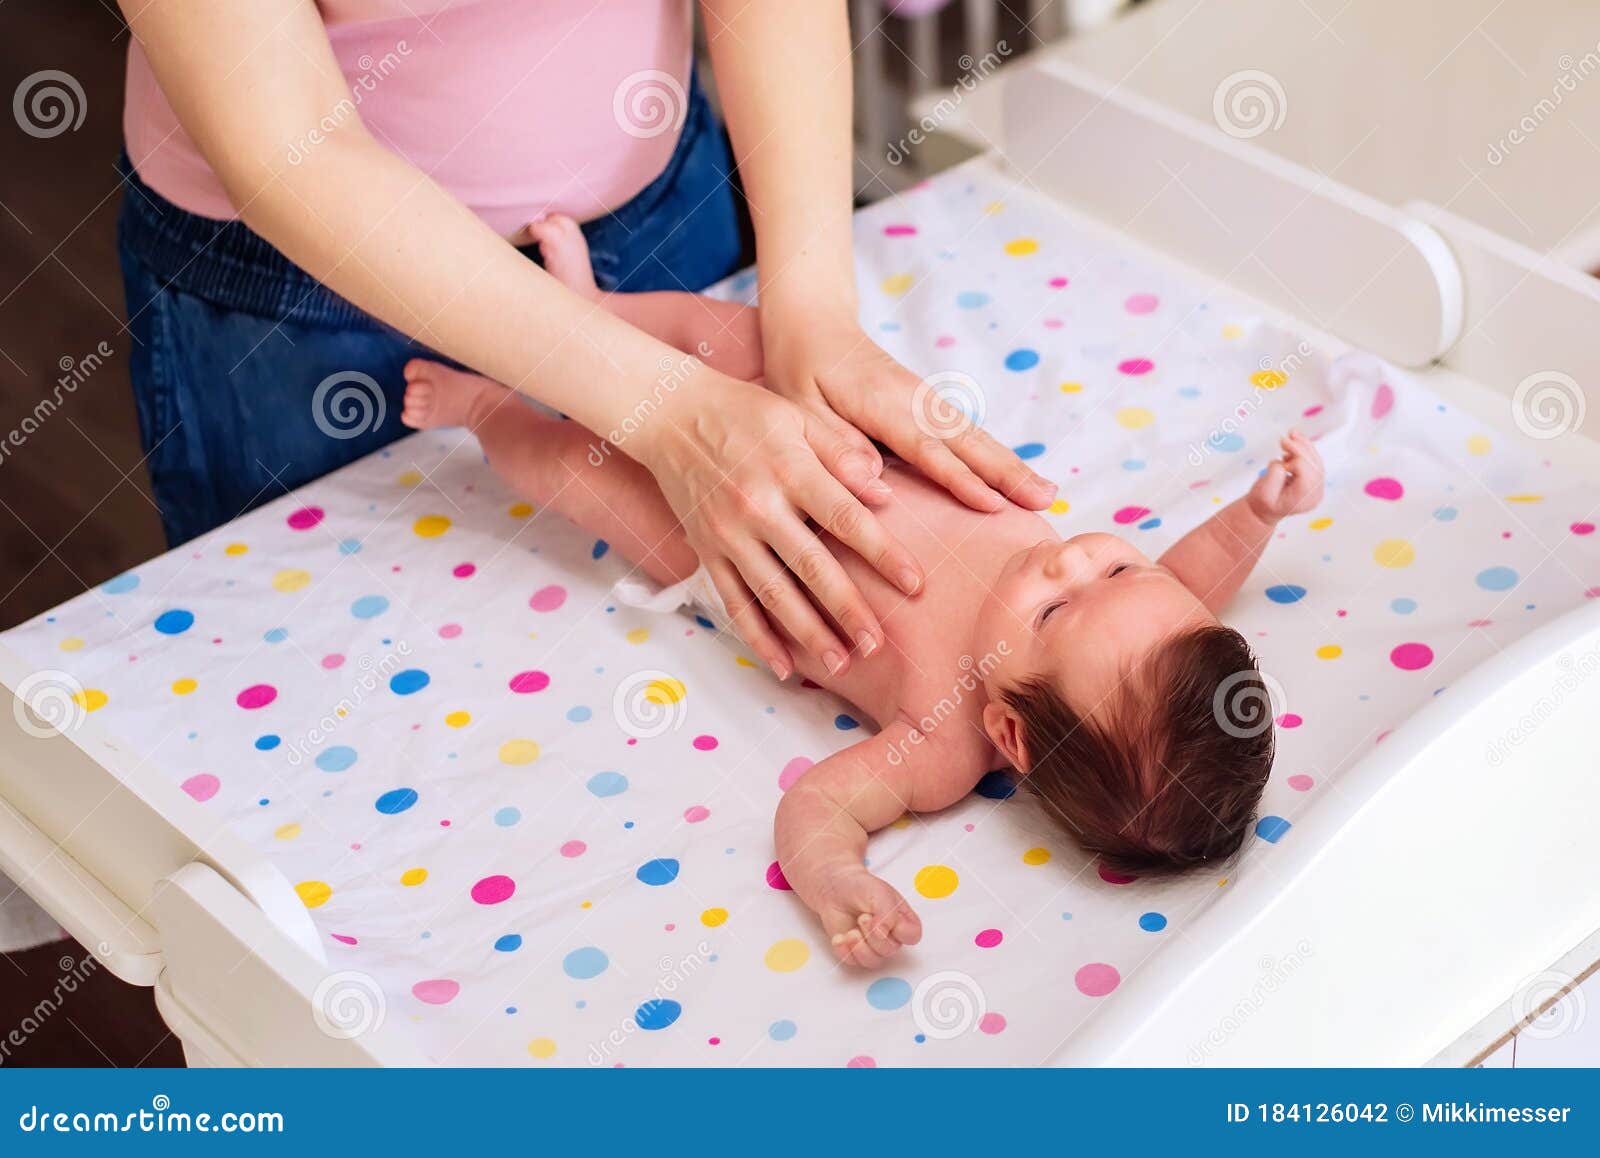 Little massage. Няня массаж. Belly massage Kids. Child belly massage. Patophysiolofy of infantile Colic.